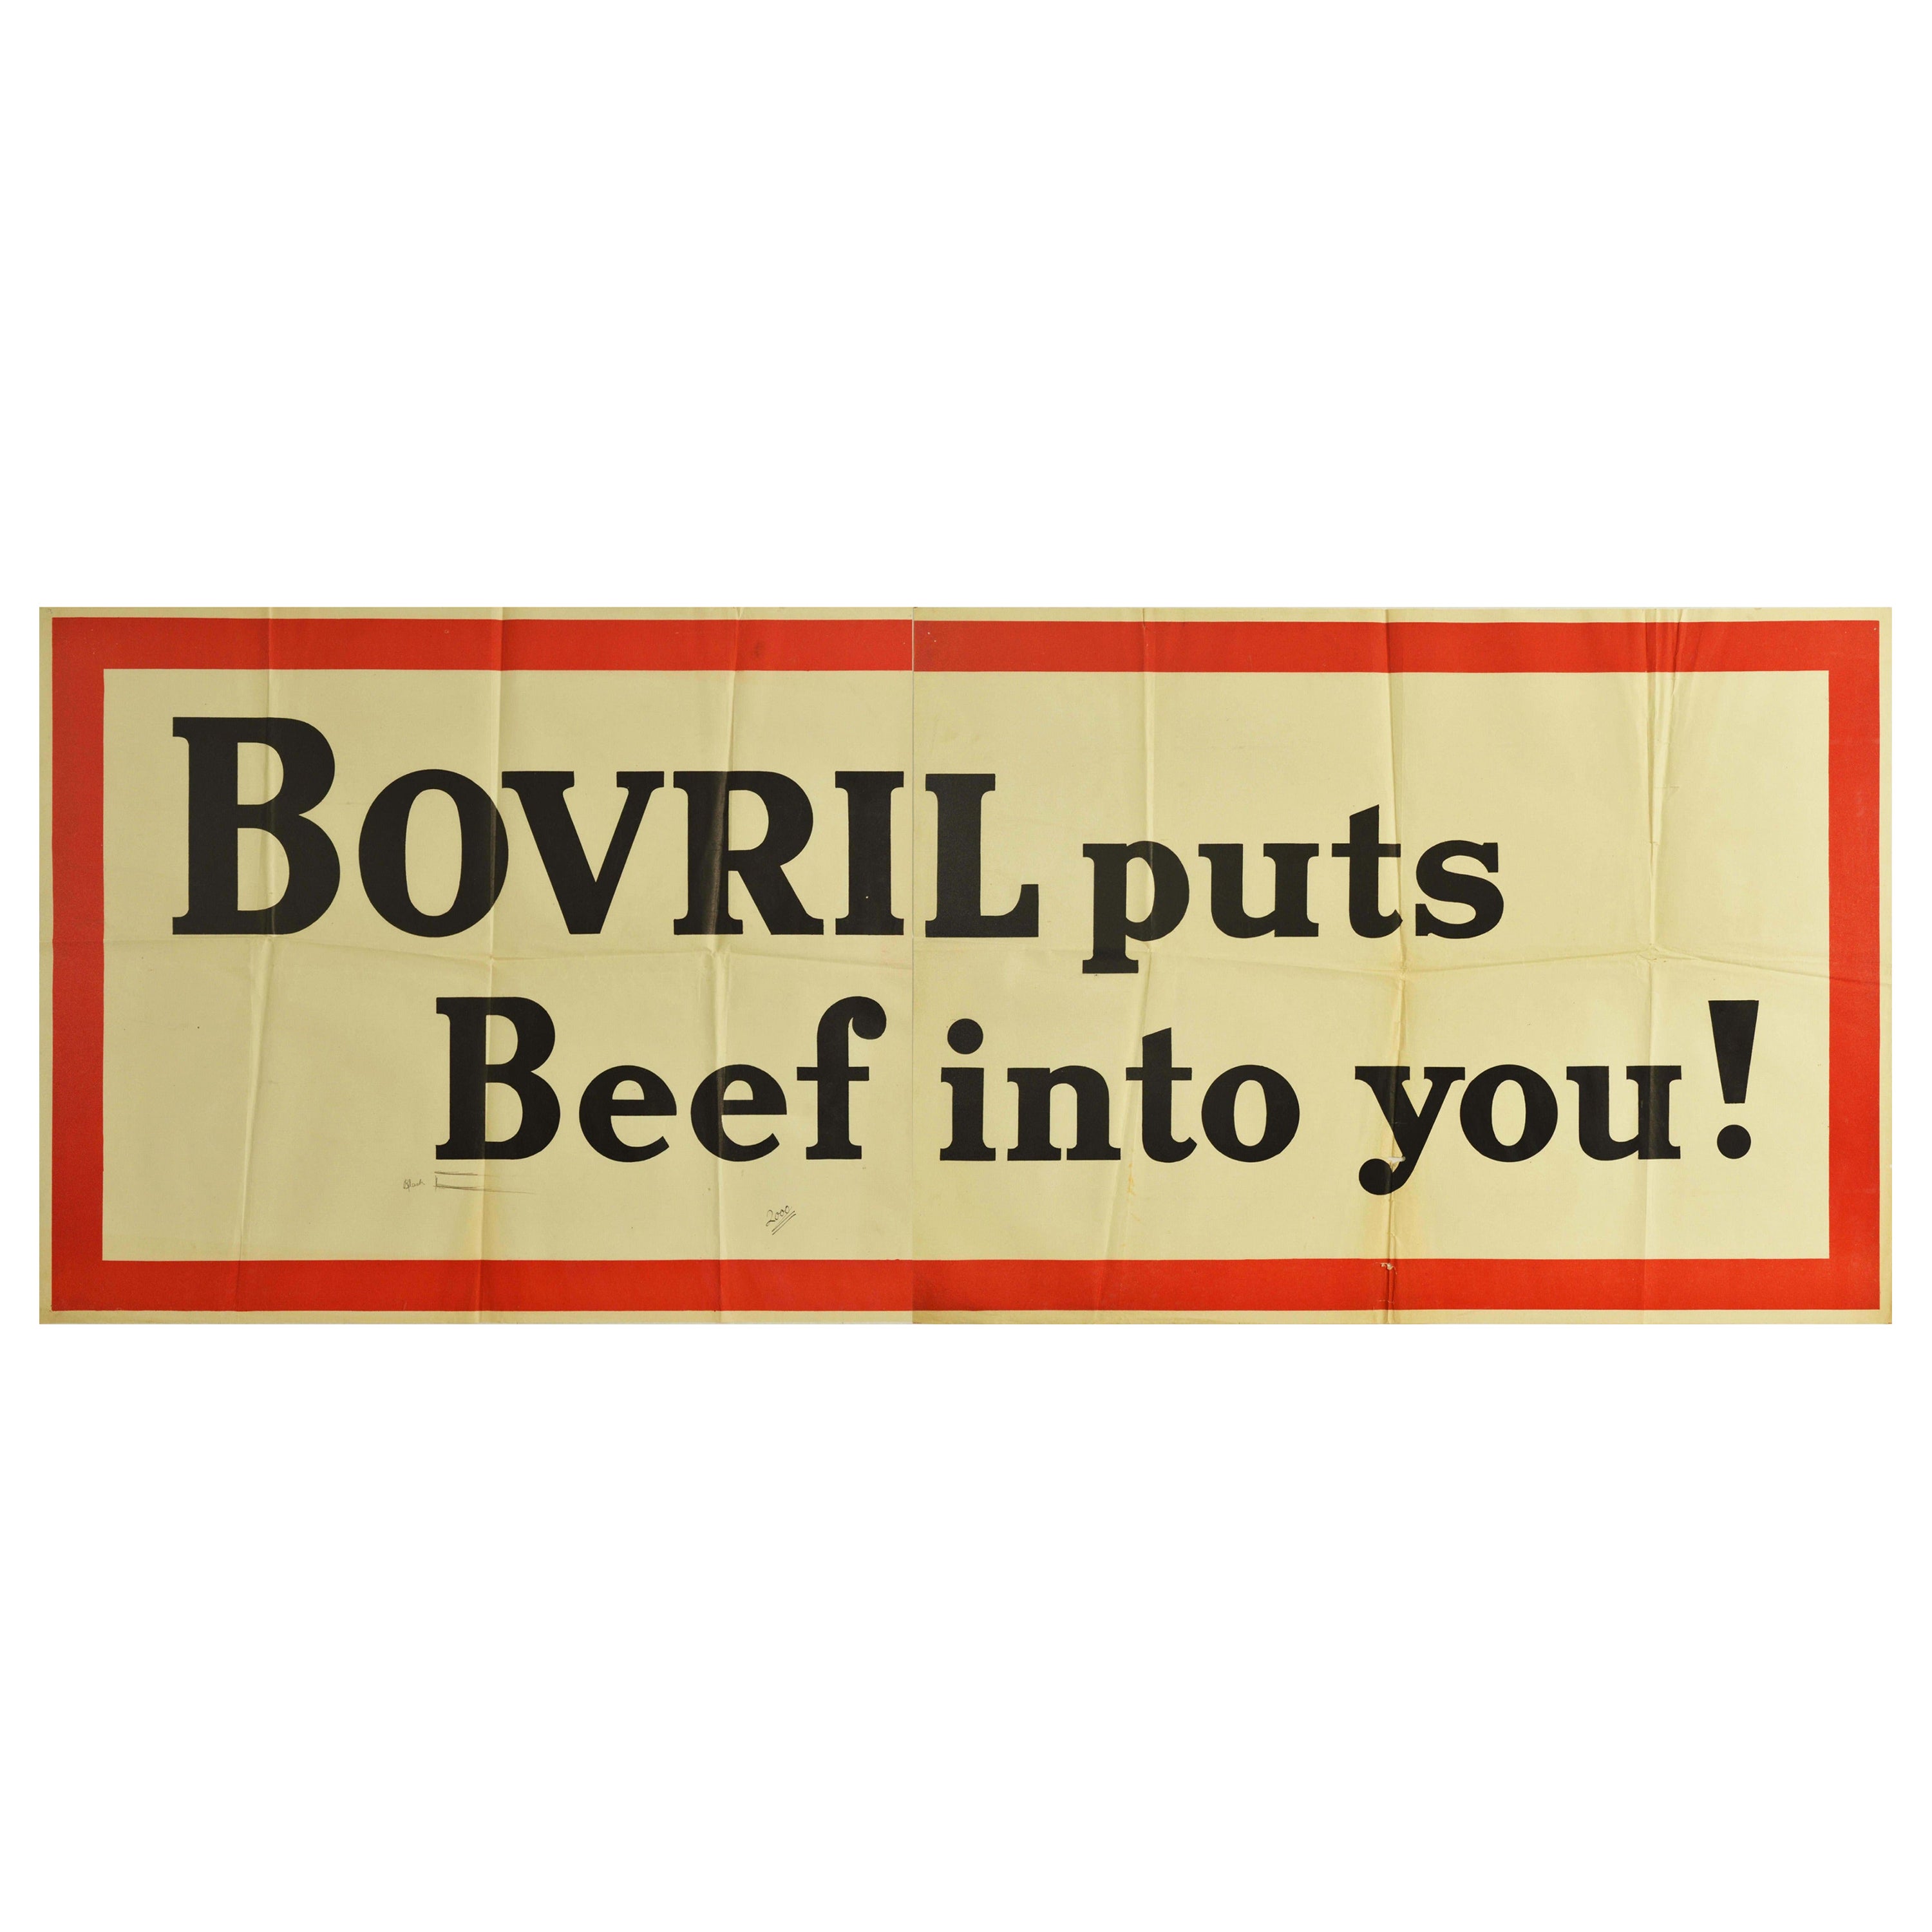 Original Vintage Poster Bovril Puts Beef Into You Advert Hot Drink Food Flavour